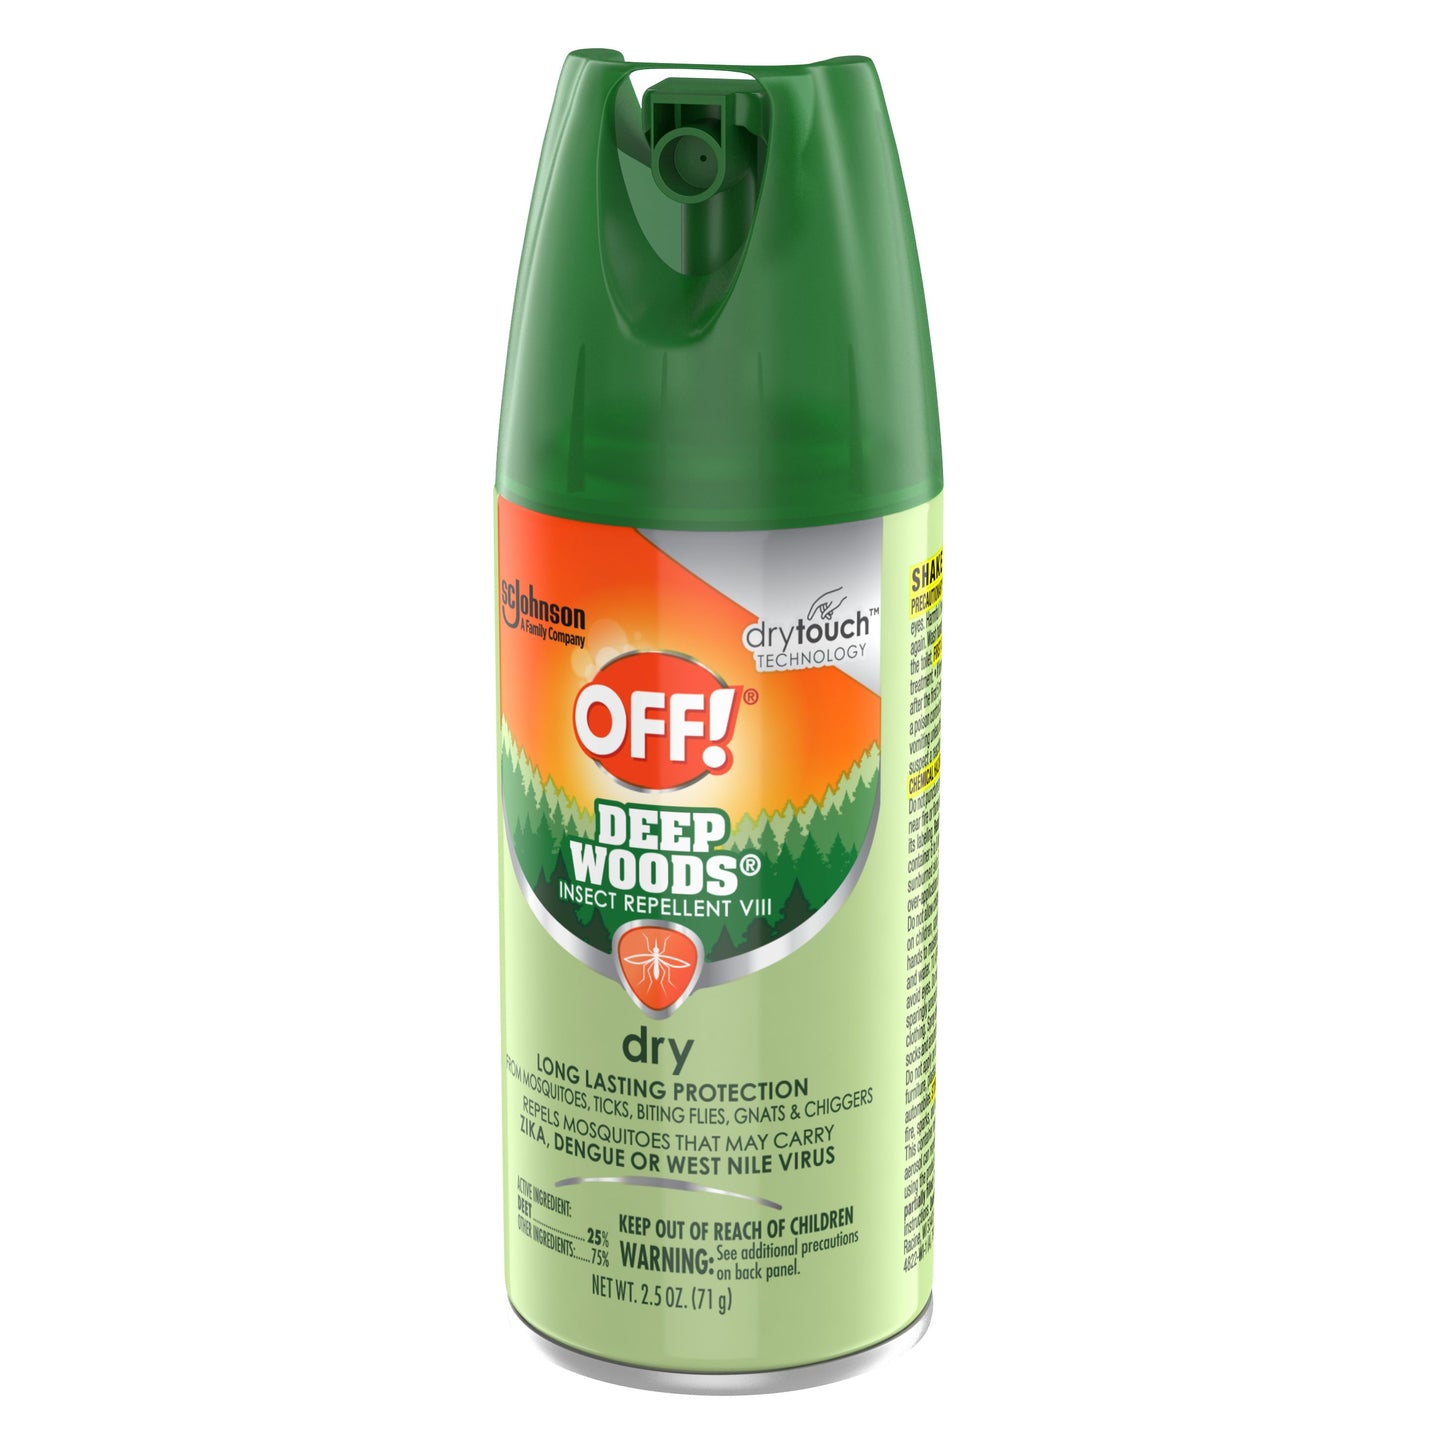 OFF! Deep Woods Mosquito Repellent VIII Dry, 2.5 oz